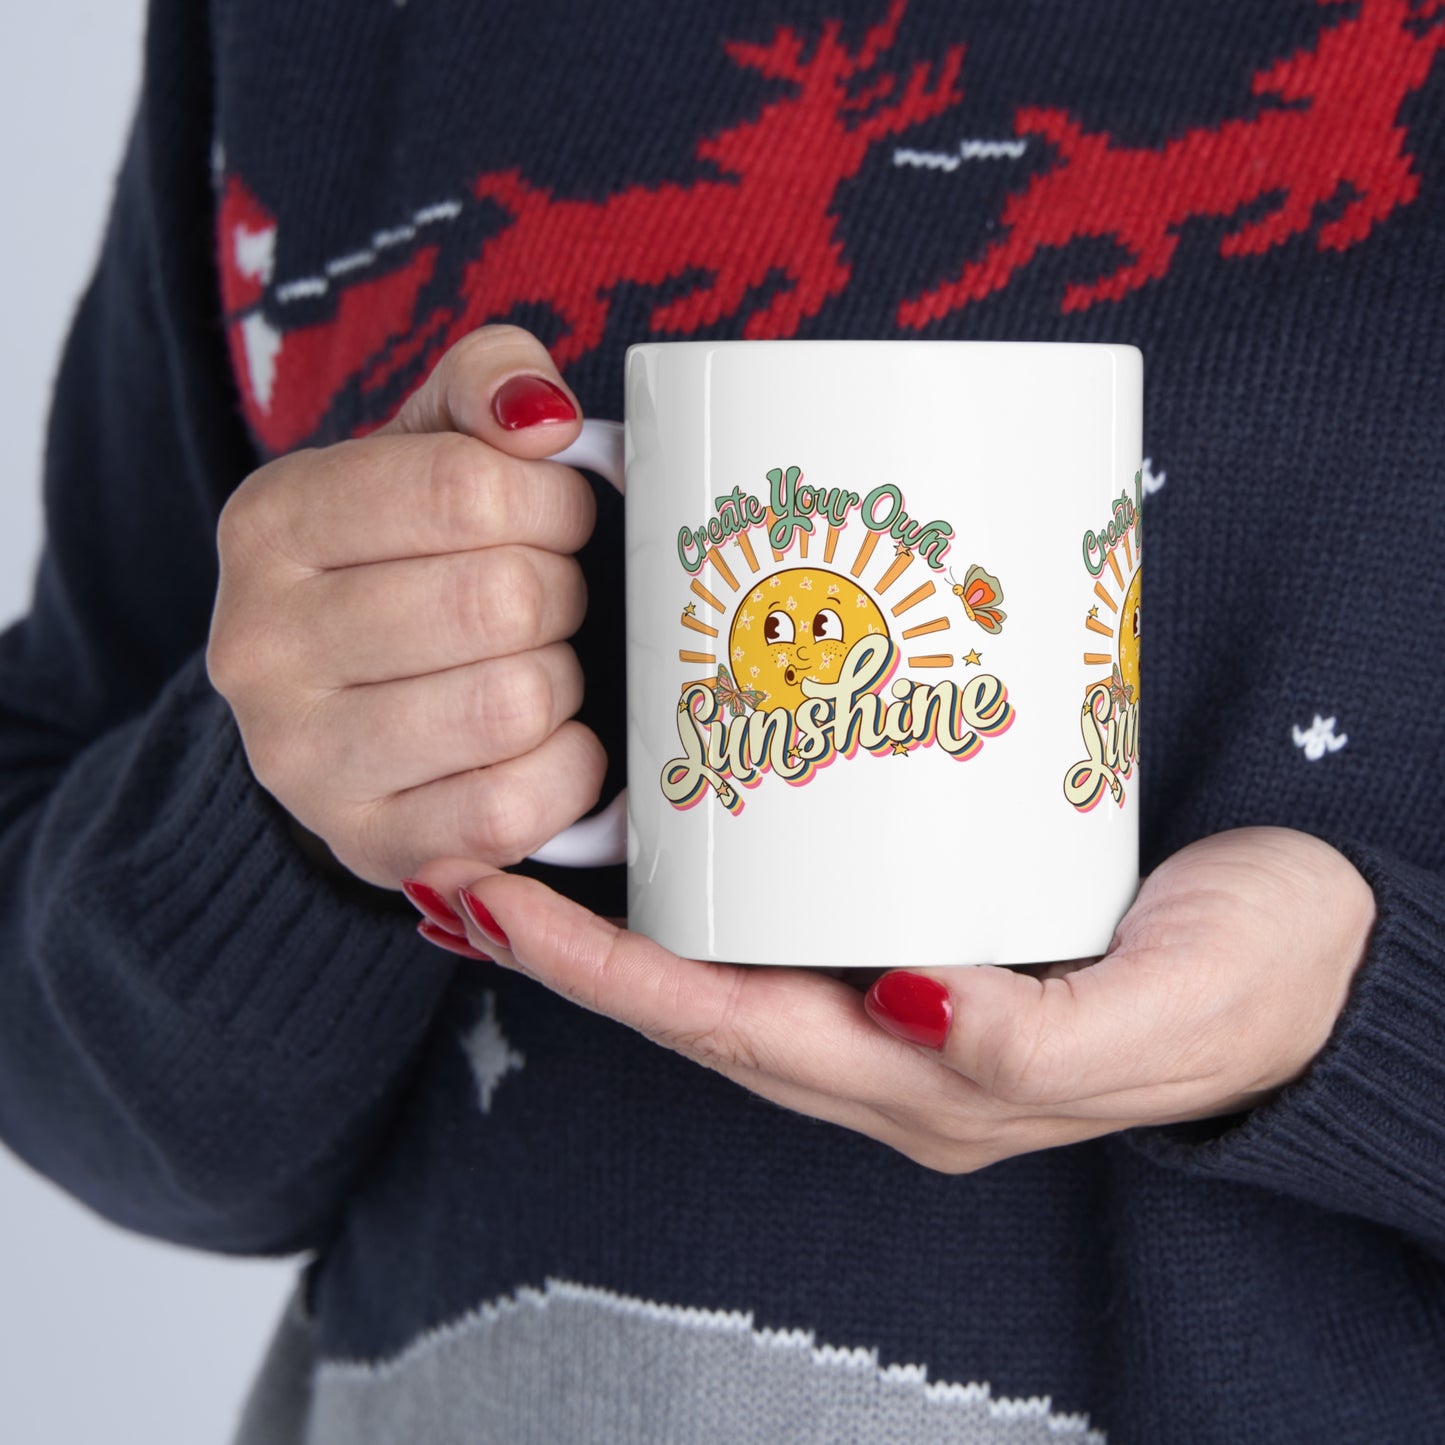 Cute Vintage Coffee Mug 11oz, Motivational Ceramic Cup, Create Your Own Sunshine